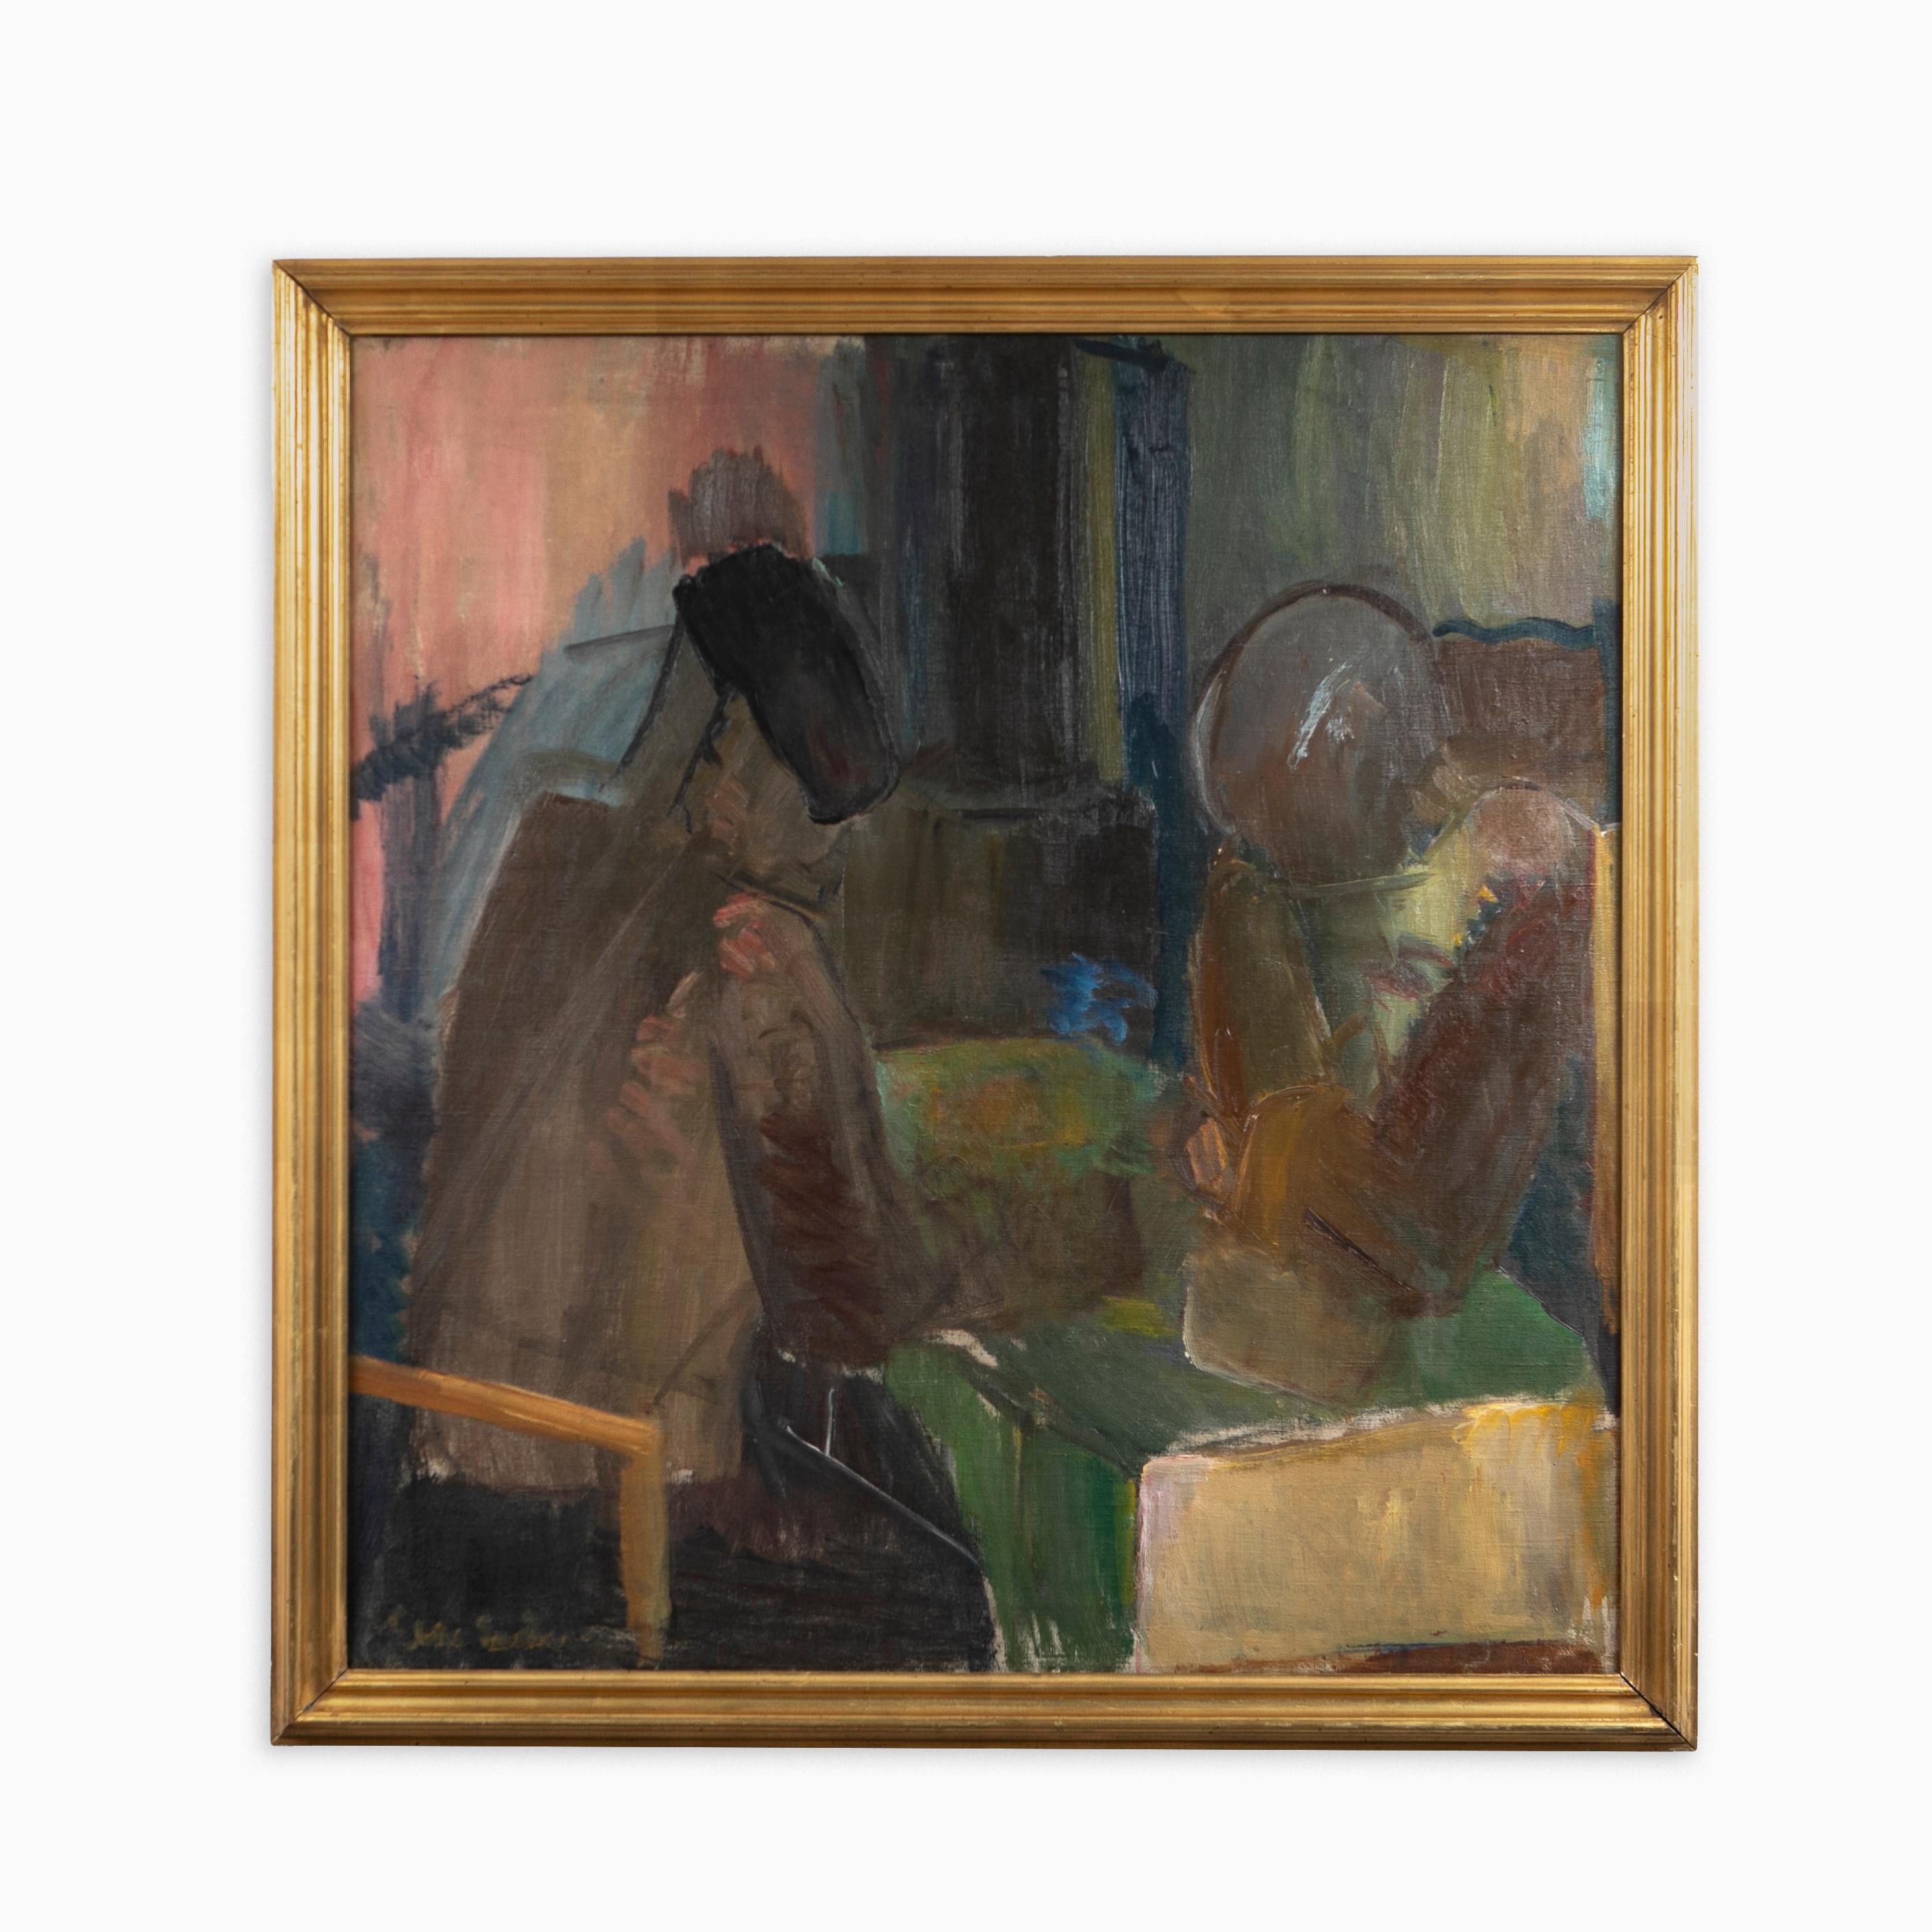 Ebba Carstensen (b. Västra Kvärnstorp, Sweden 1885, d. Copenhagen 1967).
Cubist oil painting - interior scene from a French bistro, oil on canvas. Professional art conservator cleaned.
Dimensions (cm): artwork: 90 x 85 // Frame:100 x 96 x